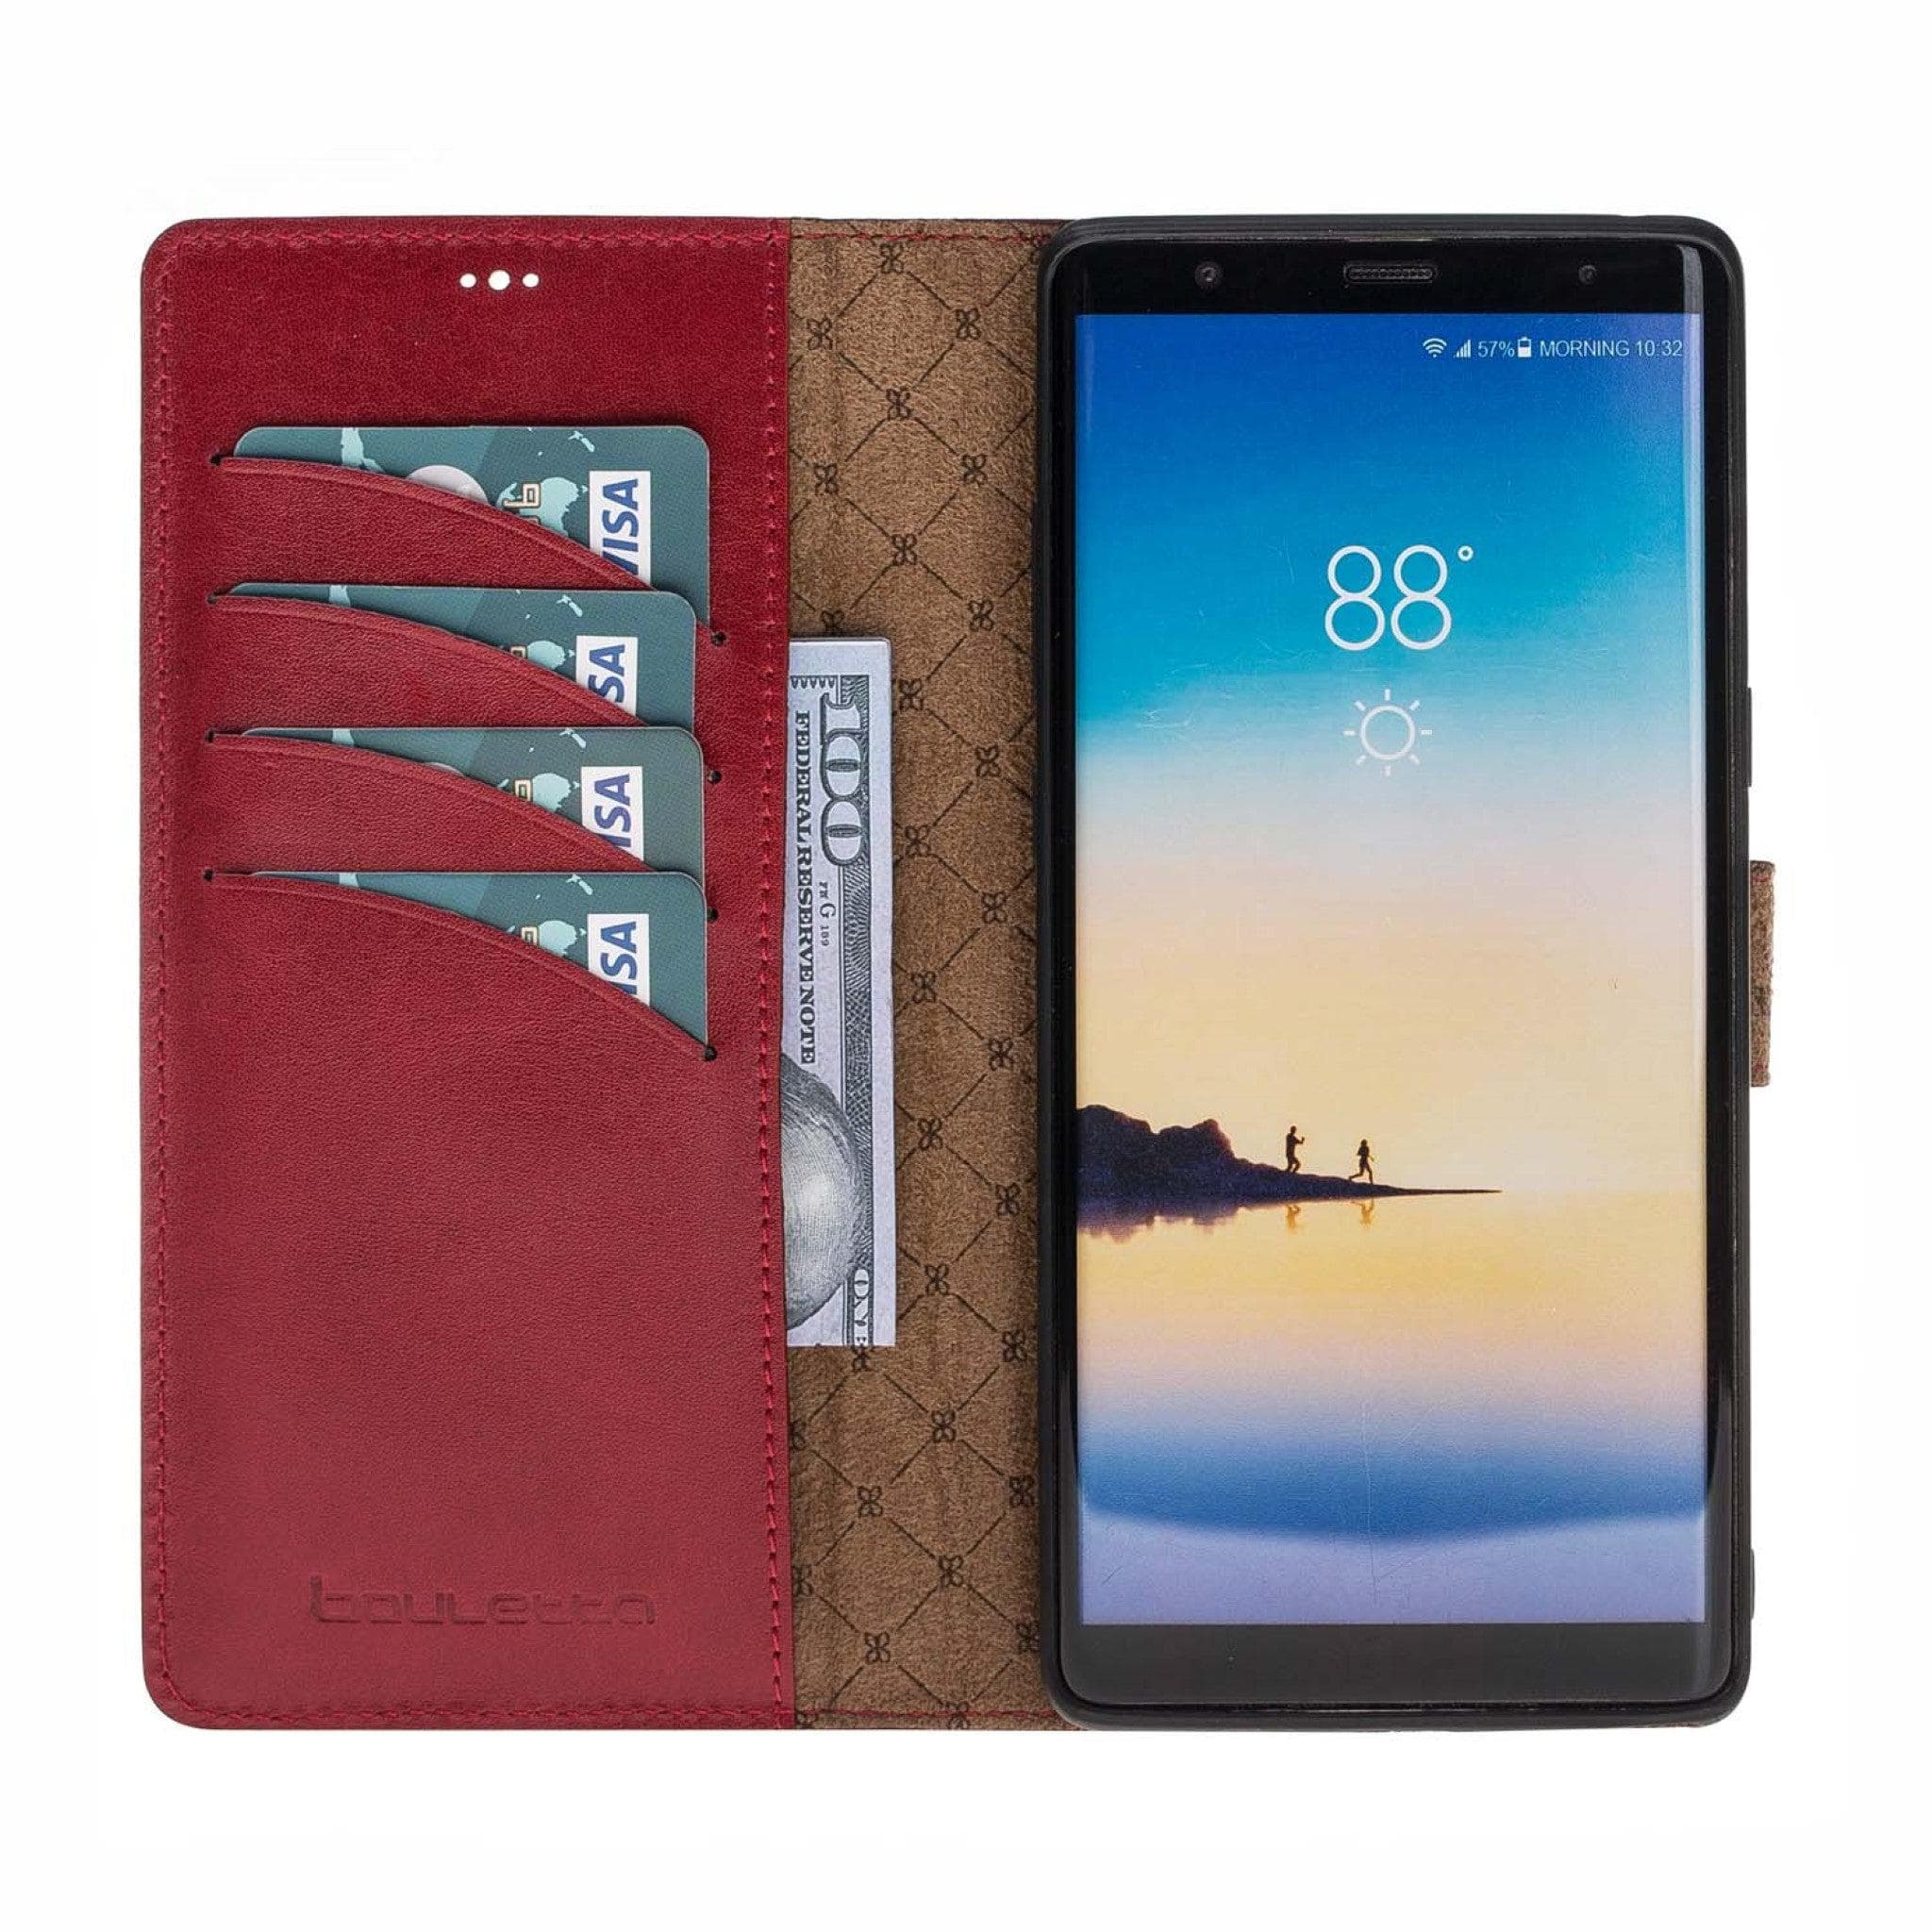 Samsung Galaxy Note 8 Series Leather Wallet Case Bouletta LTD